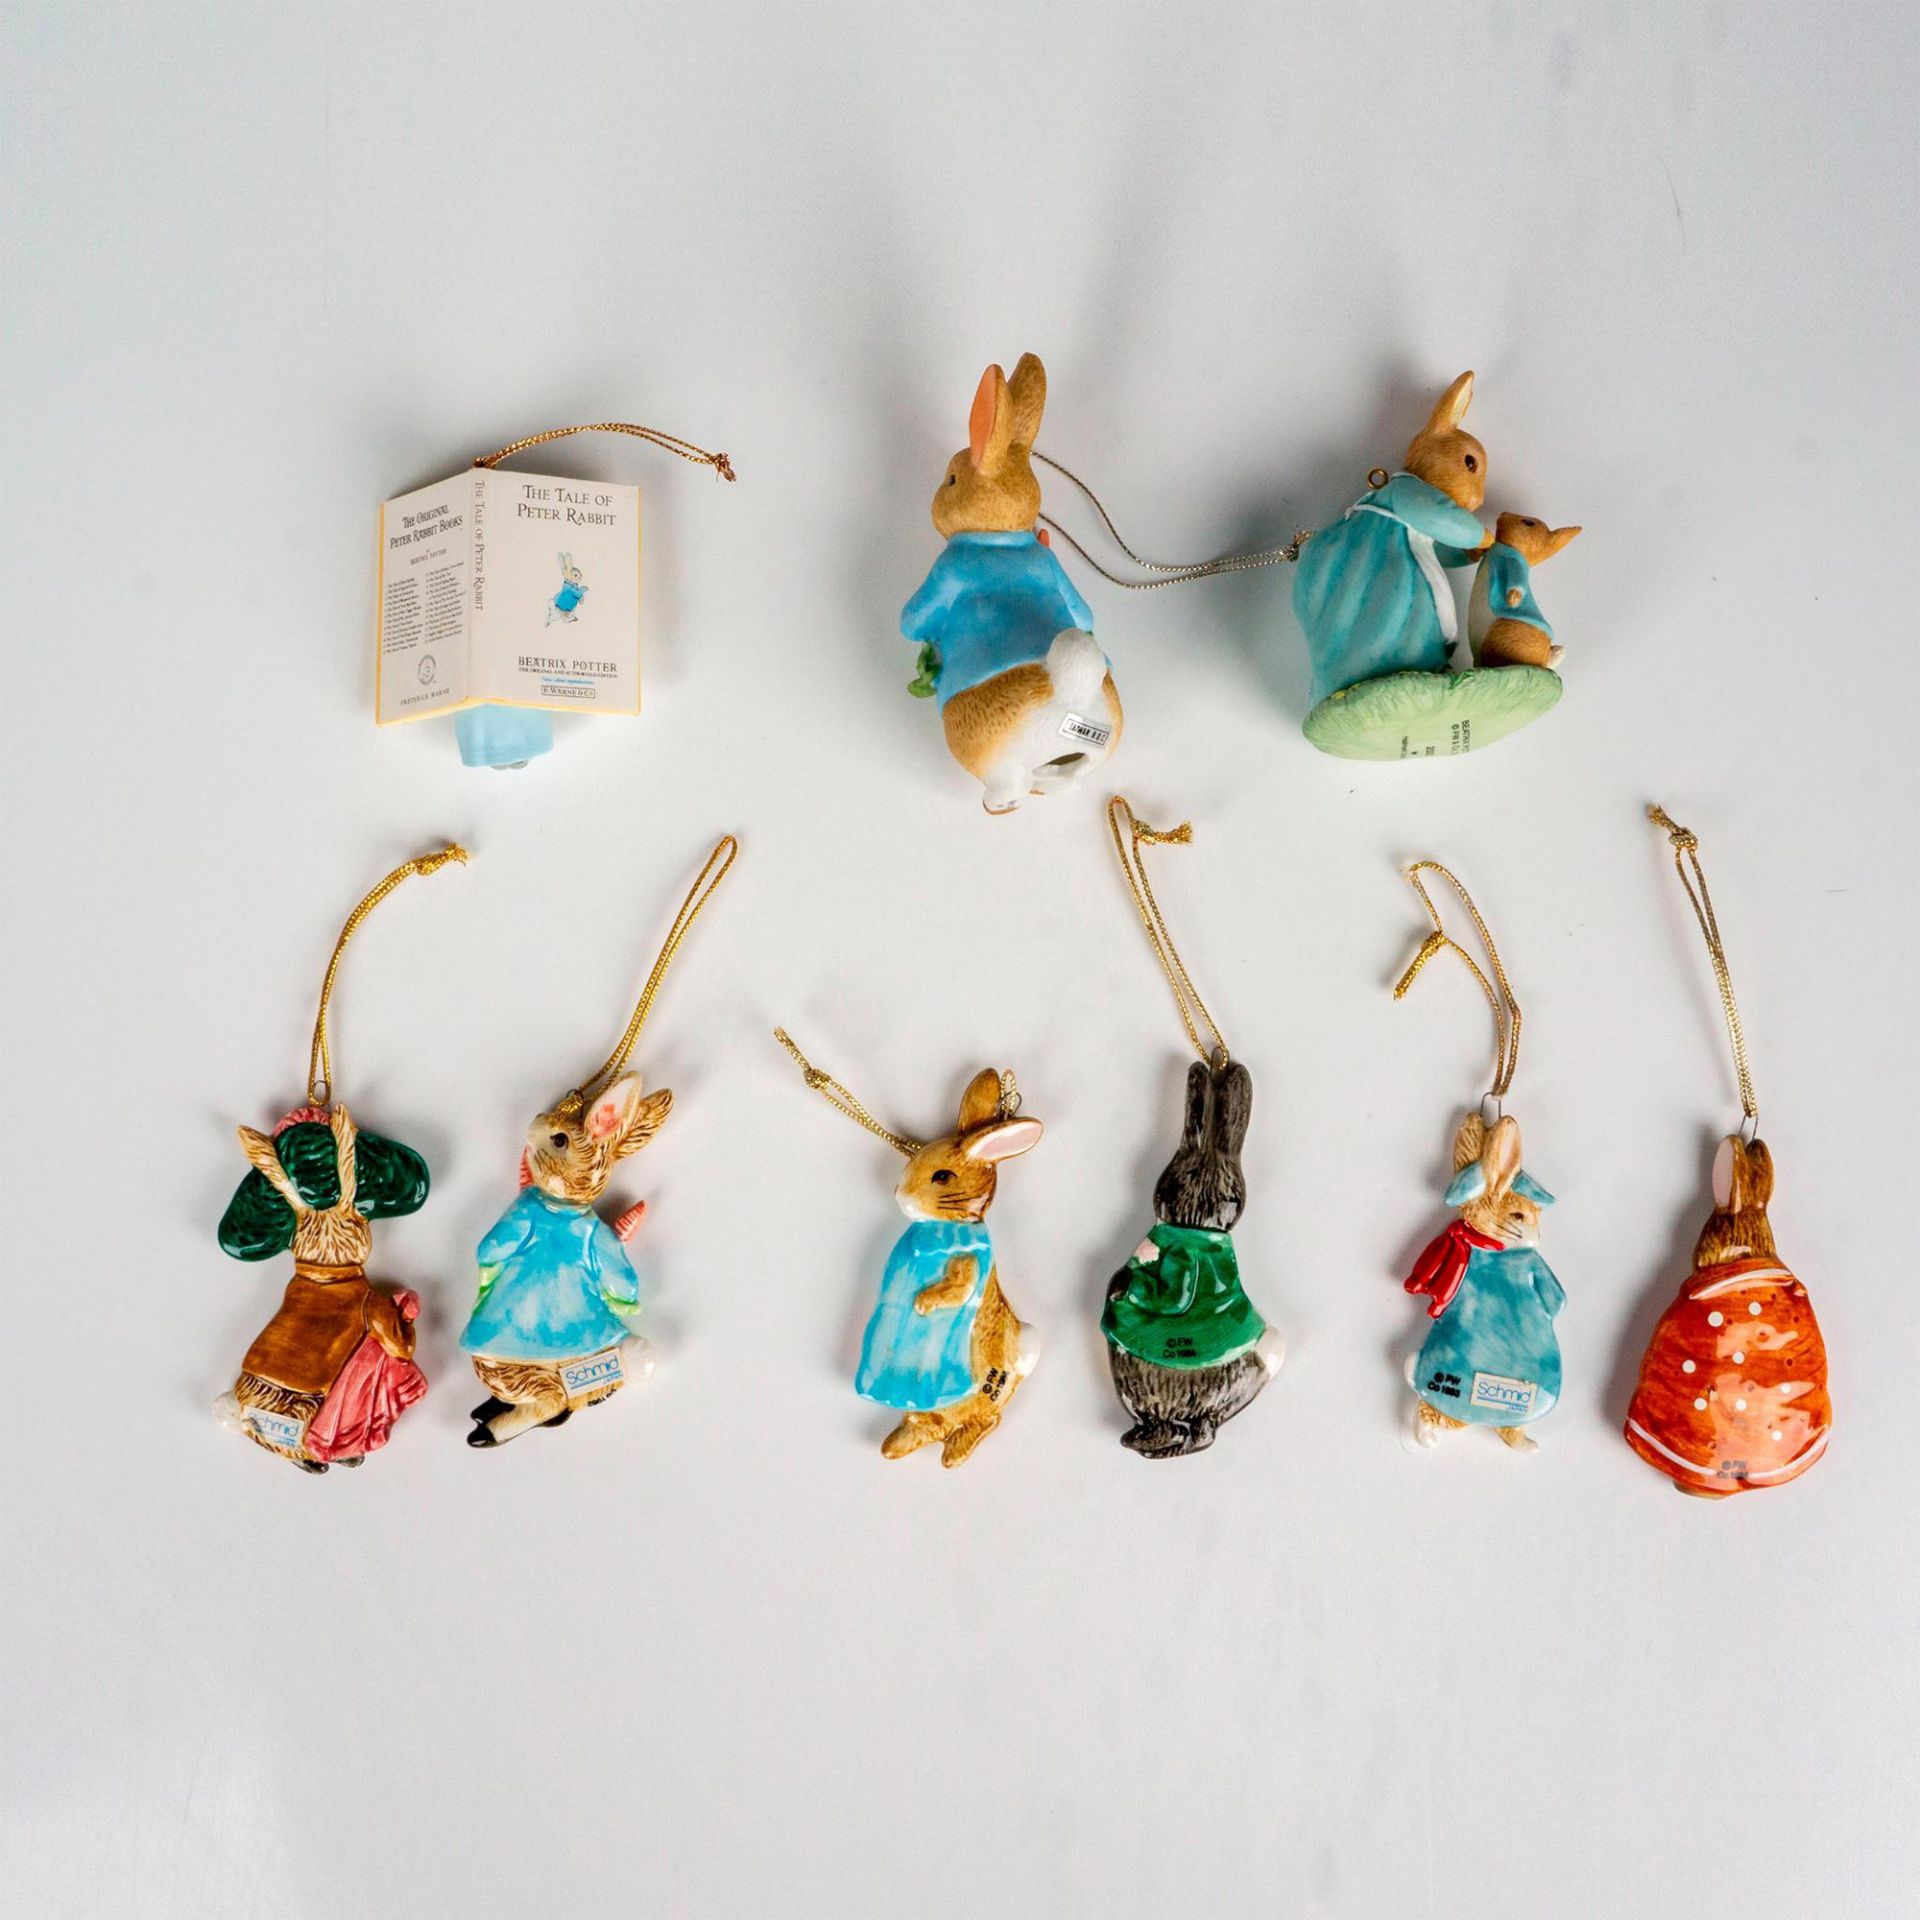 Lot of 9 Beatrix Potter Peter Rabbit Holiday Ornaments - Image 2 of 2